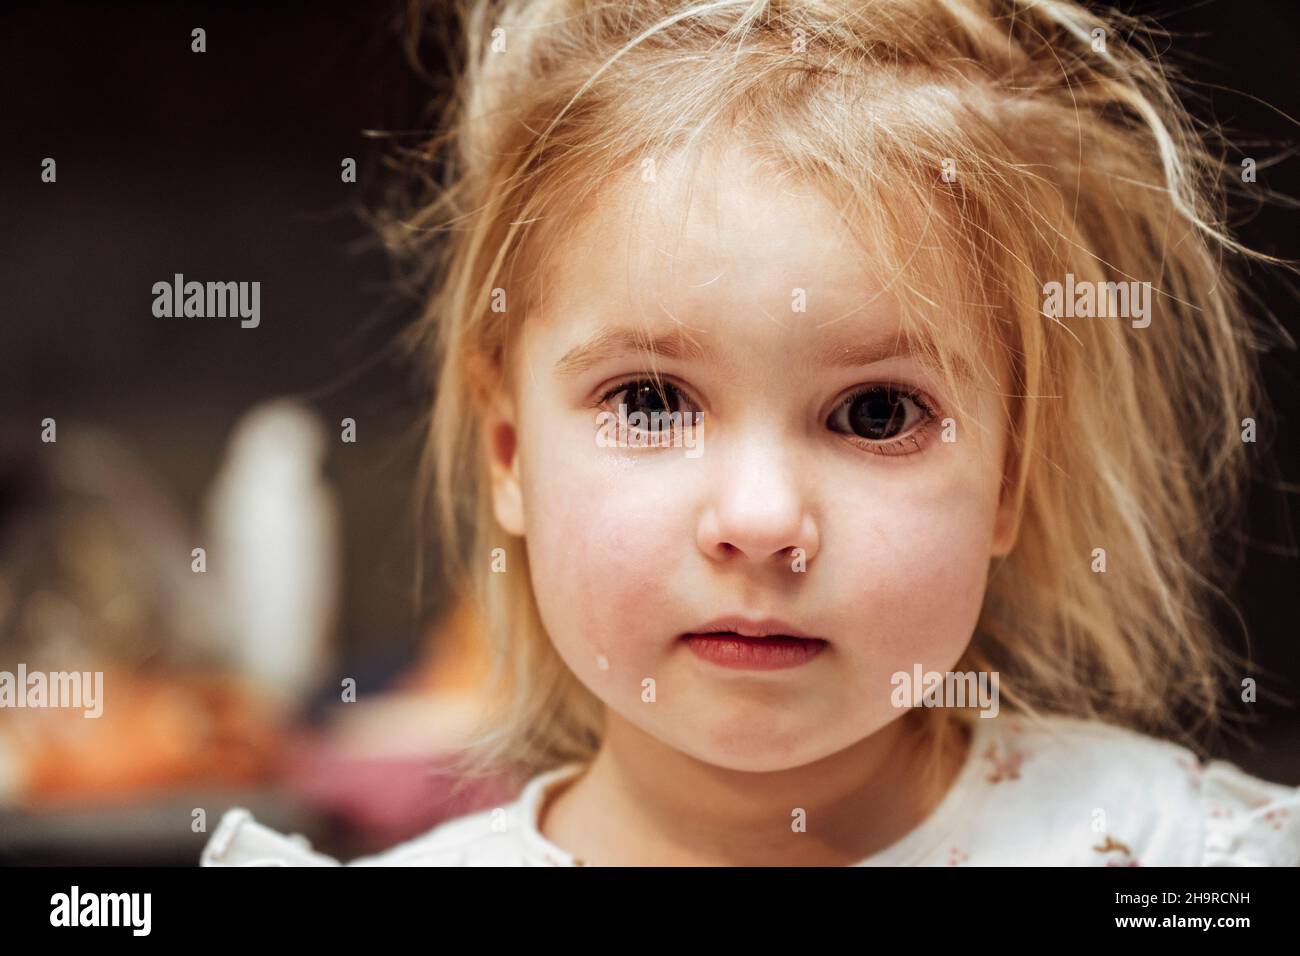 Crying child portrait. Stock Photo